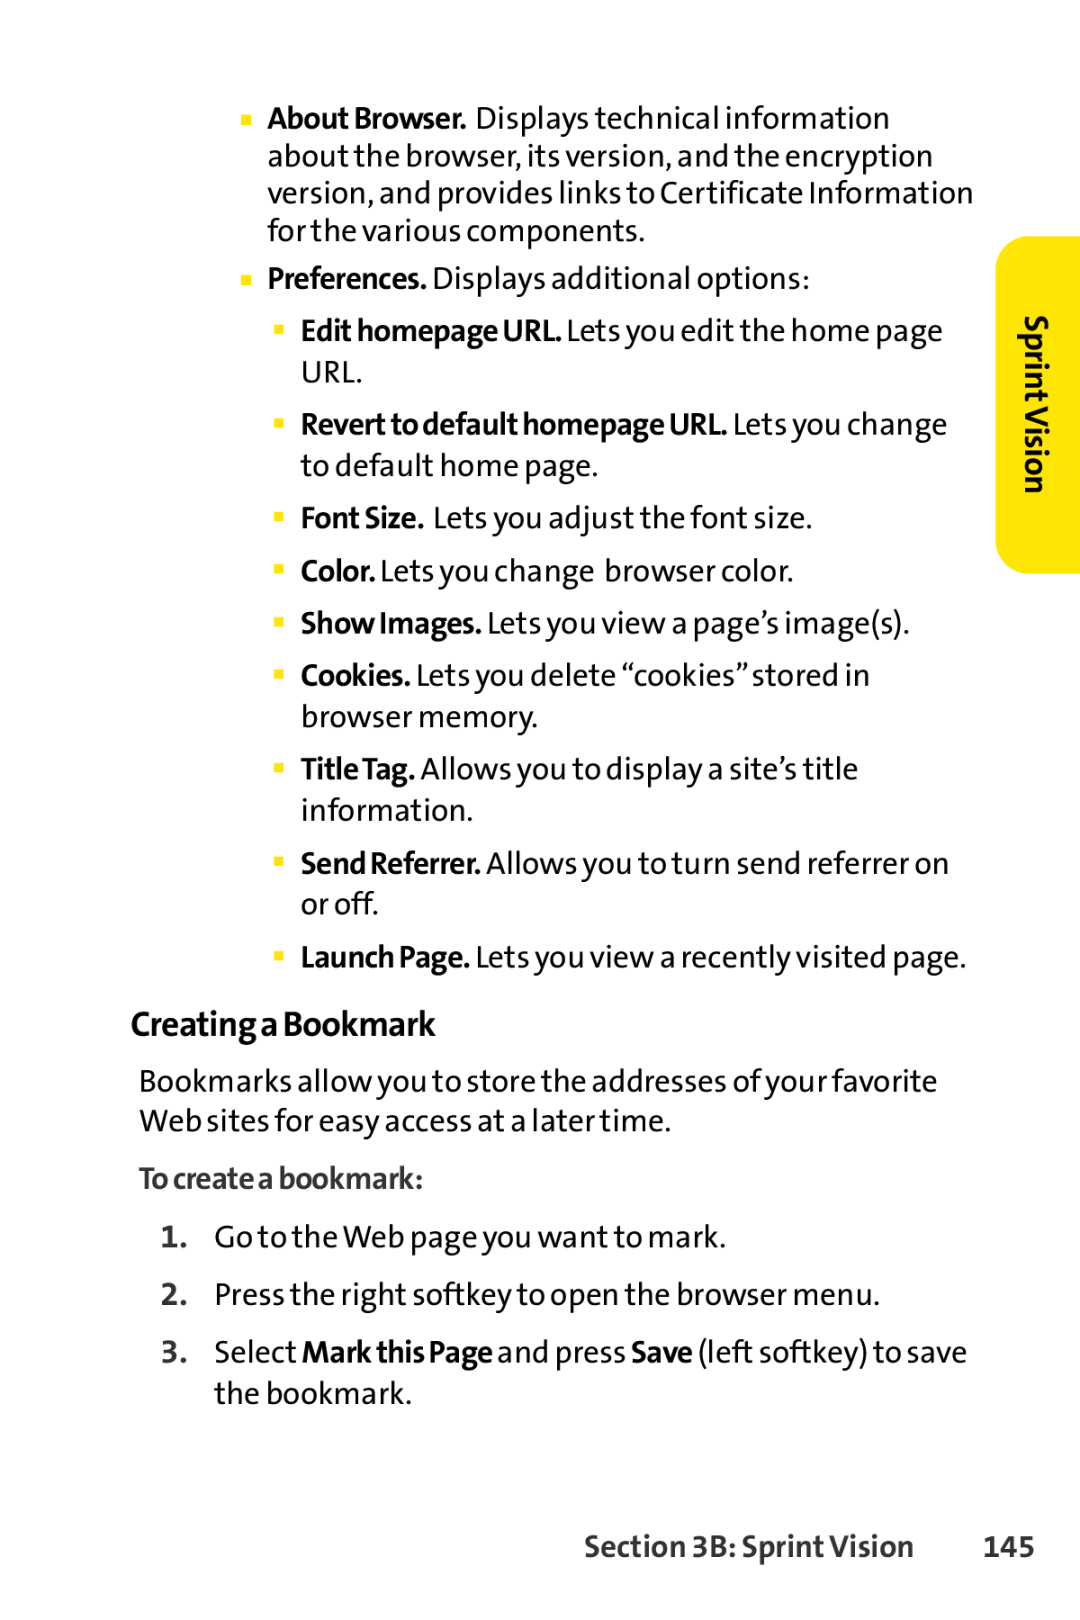 Sprint Nextel LX160 CreatingaBookmark,  ReverttodefaulthomepageURL. Lets you change to default home page, Sprint Vision 